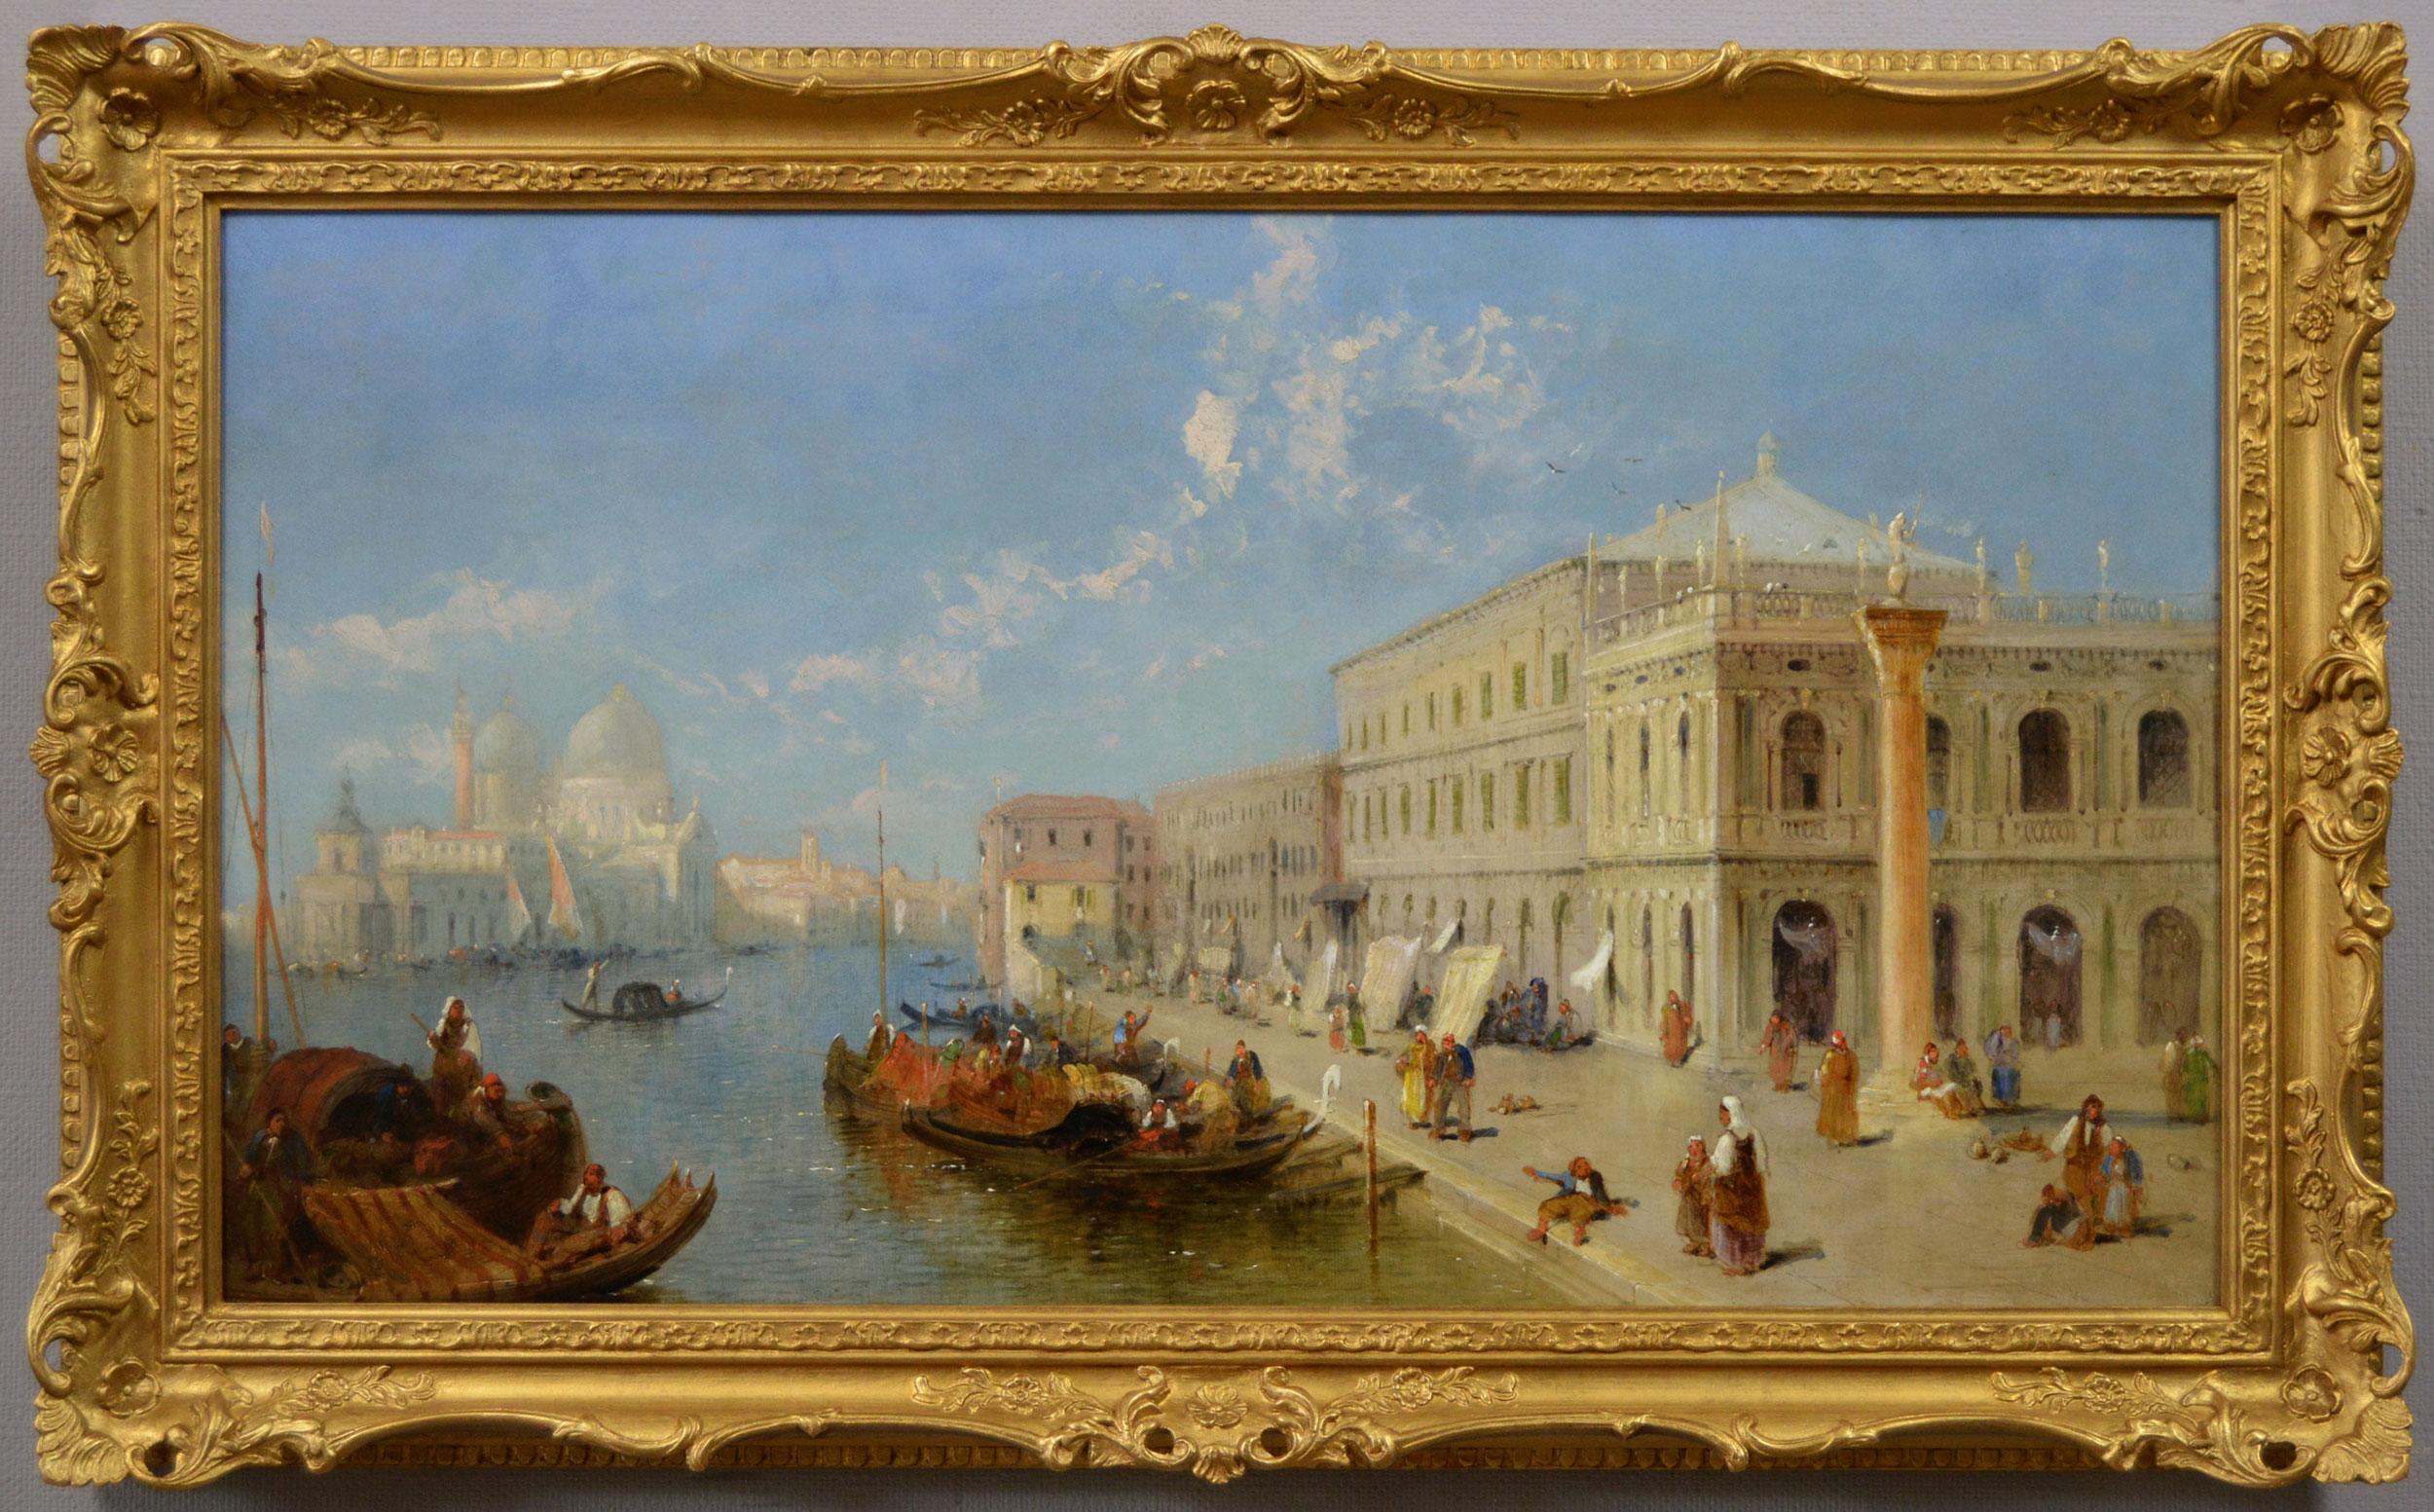 Jane Vivian Landscape Painting – Ölgemälde der Dogana & Santa Maria della Salute aus dem 19. Jahrhundert, Venedig